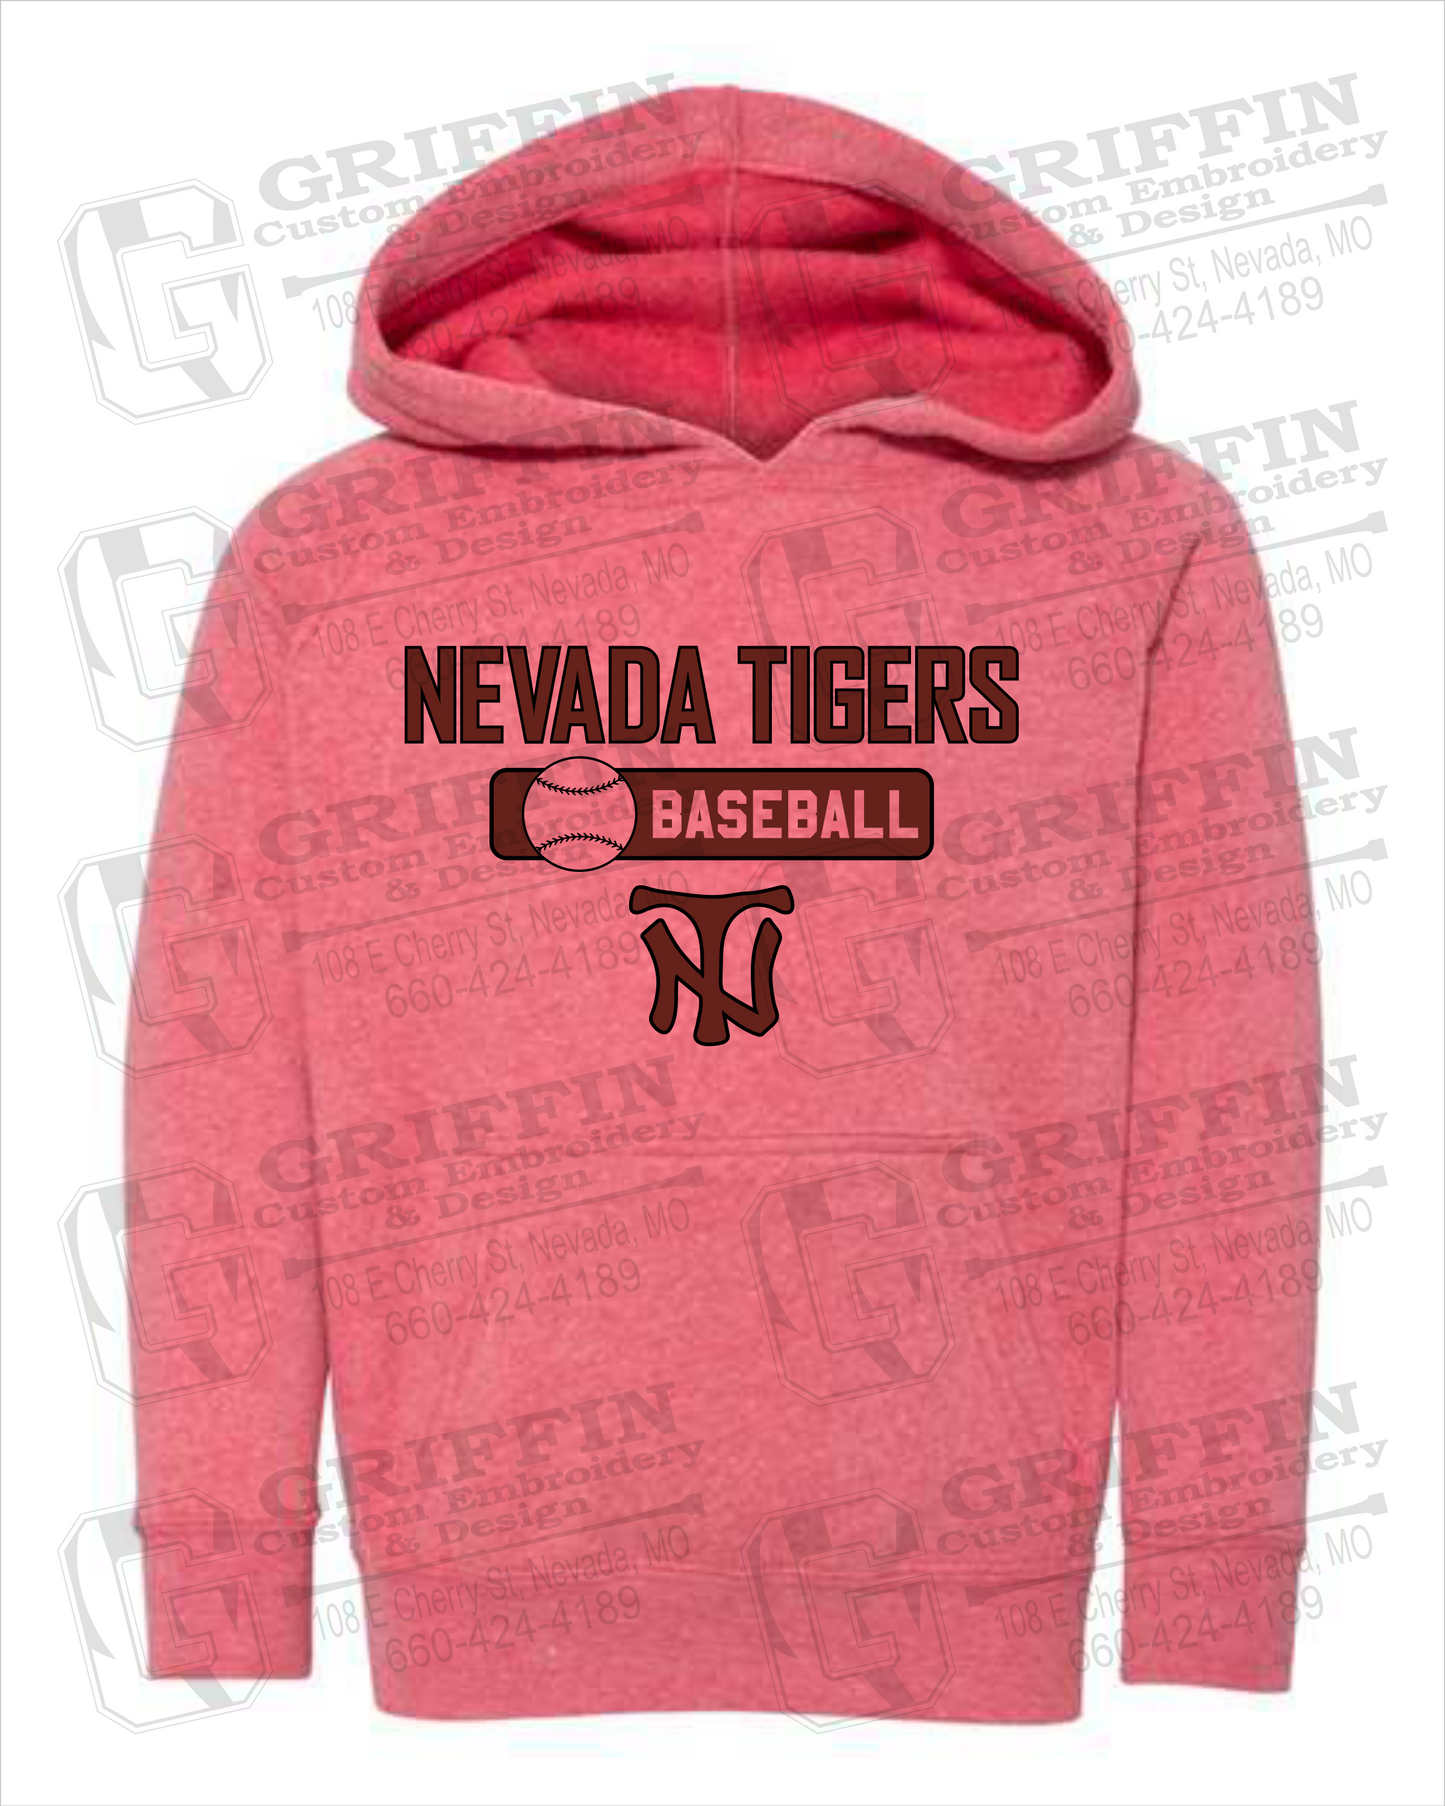 Nevada Tigers 24-S Toddler Hoodie - Baseball